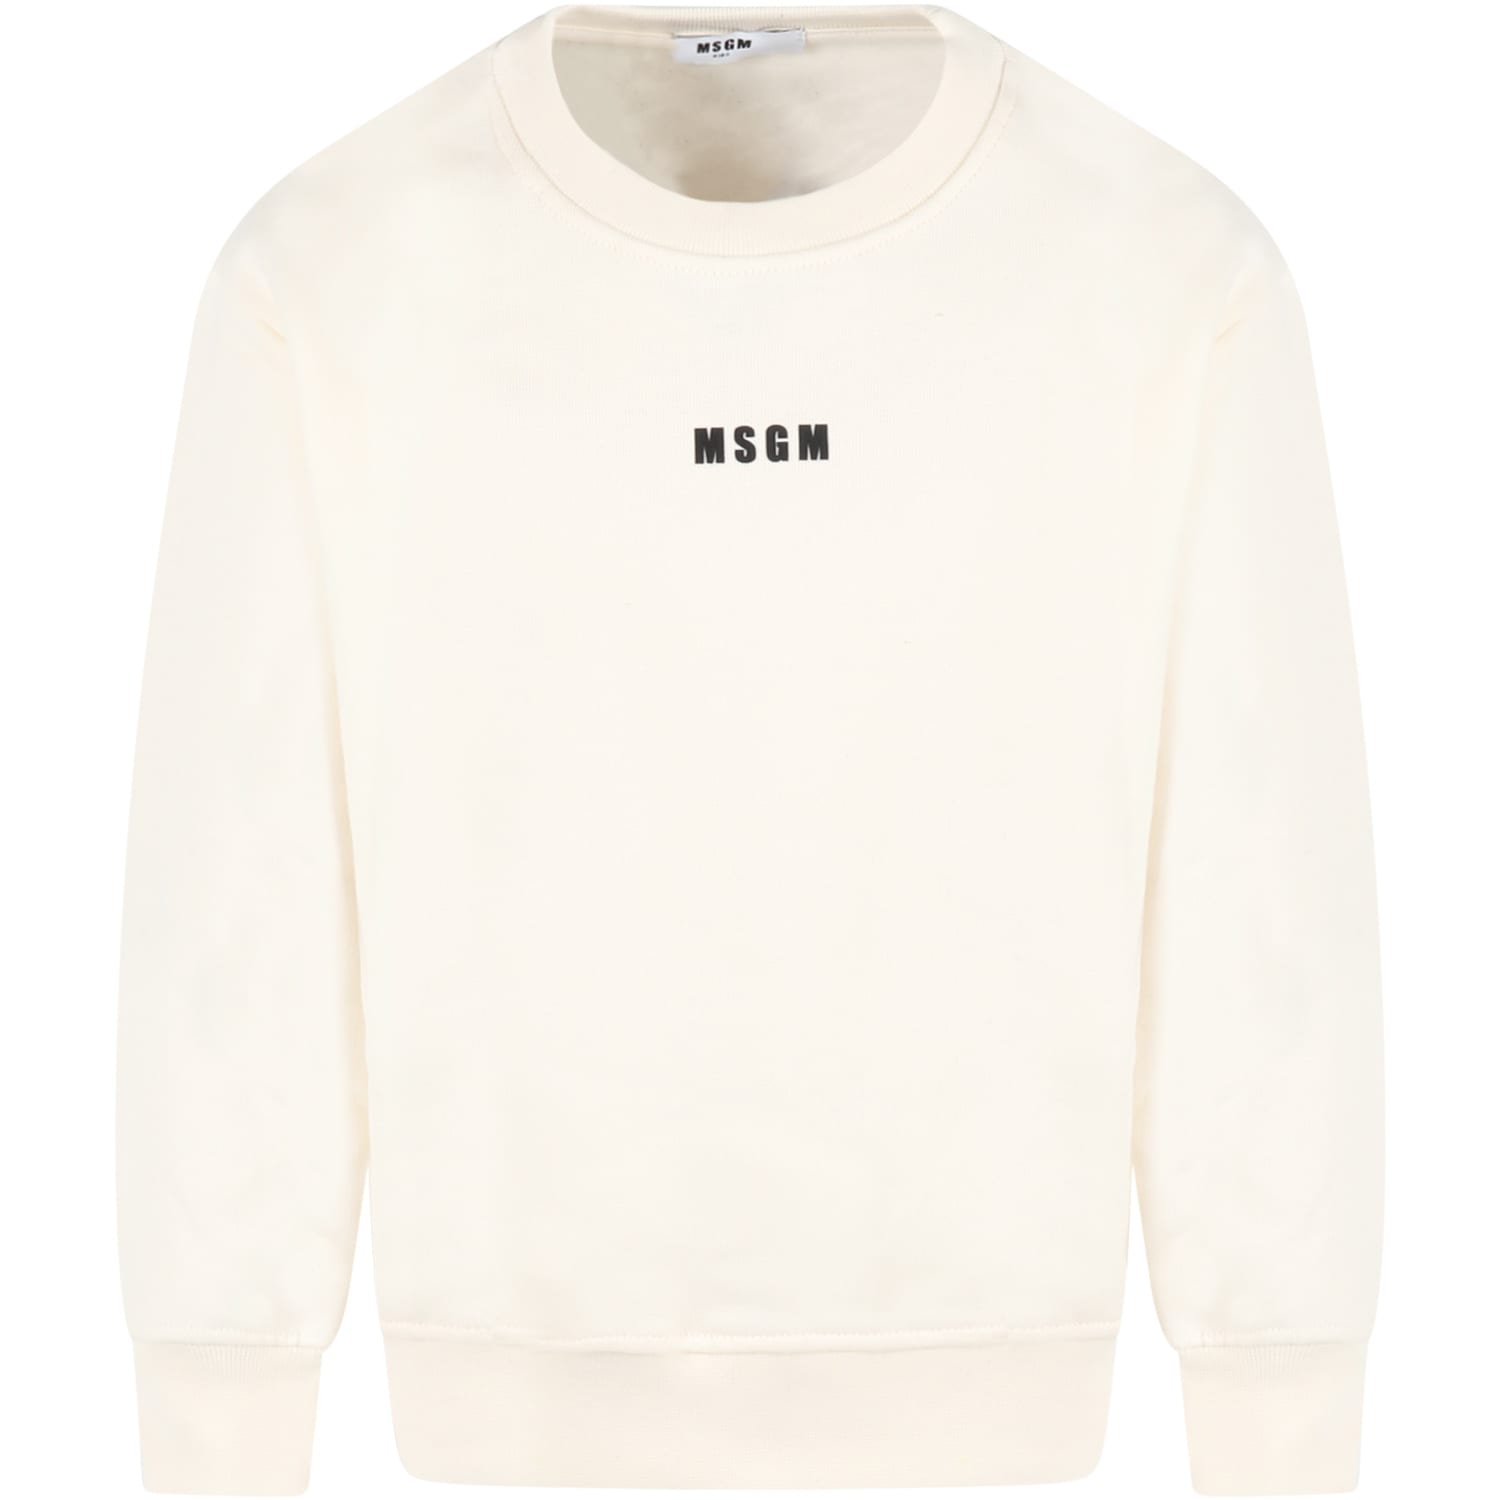 MSGM Ivory Sweatshirt For Kids With Black Logo